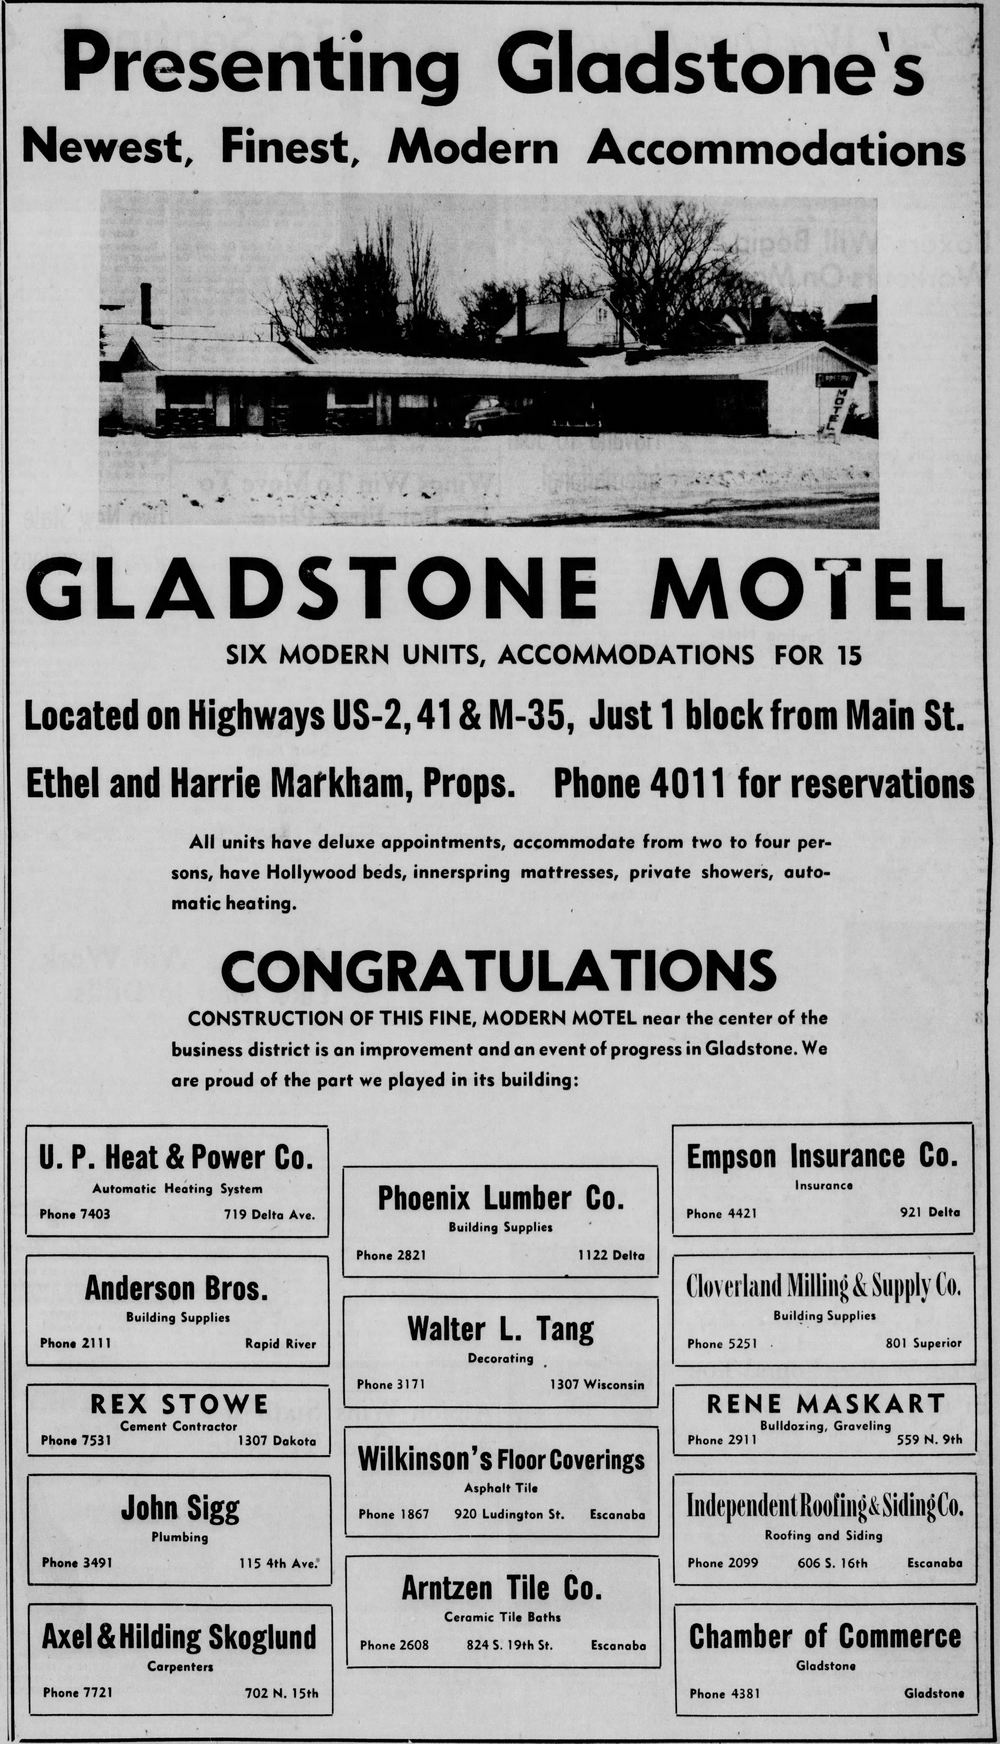 Gladstone Motel - Dec 18 1953 Opening Ad